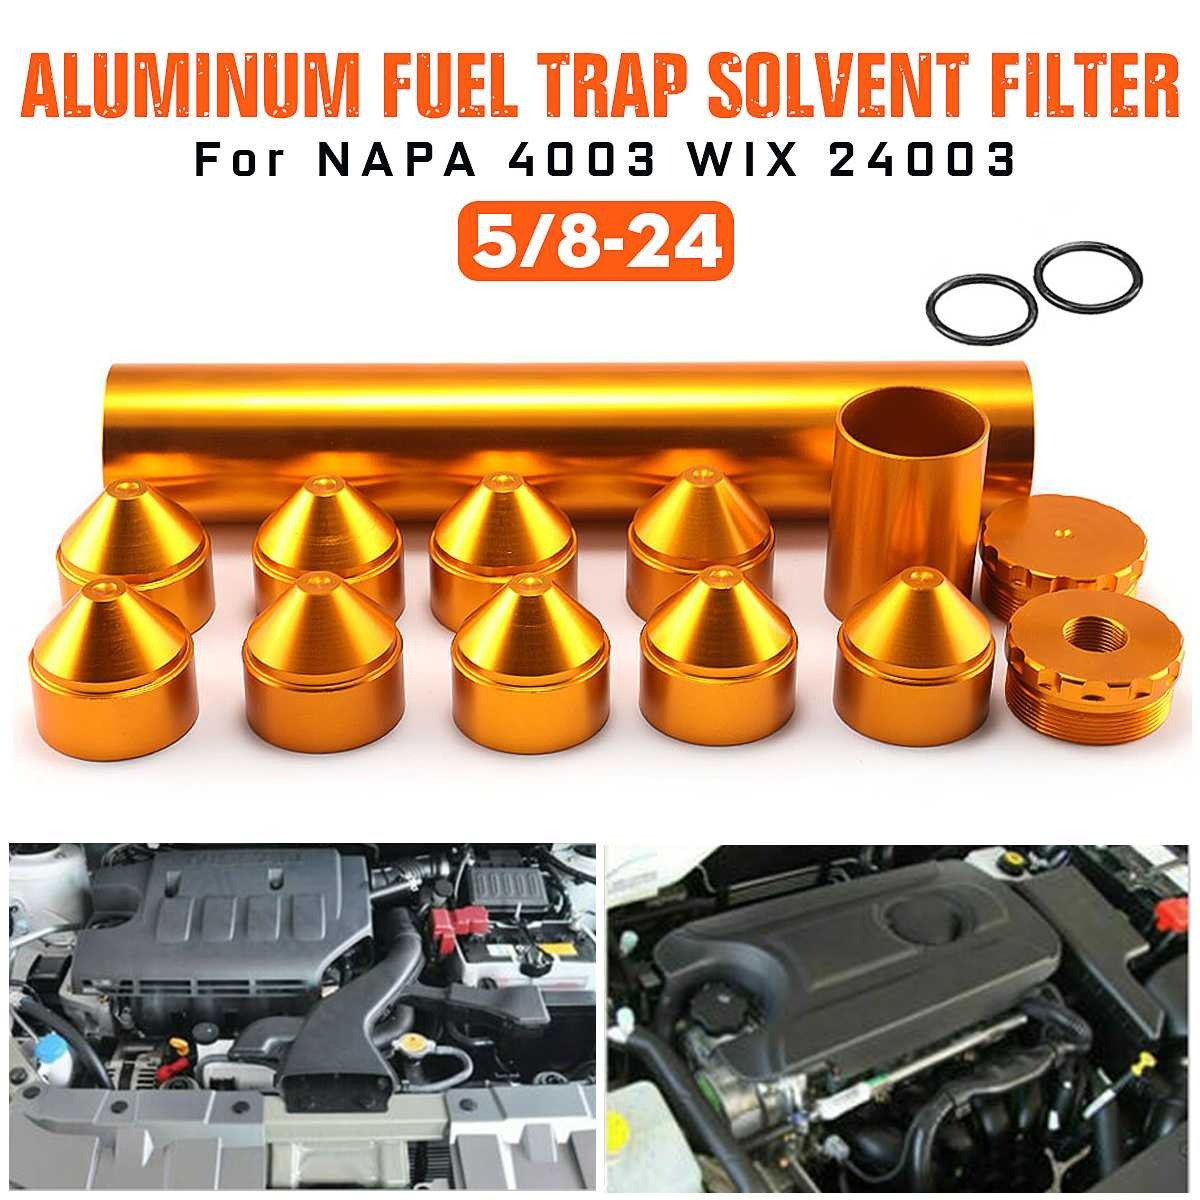 Aluminum Car Solvent Trap kit Filter Fuel For NAPA 4003 WIX 24003